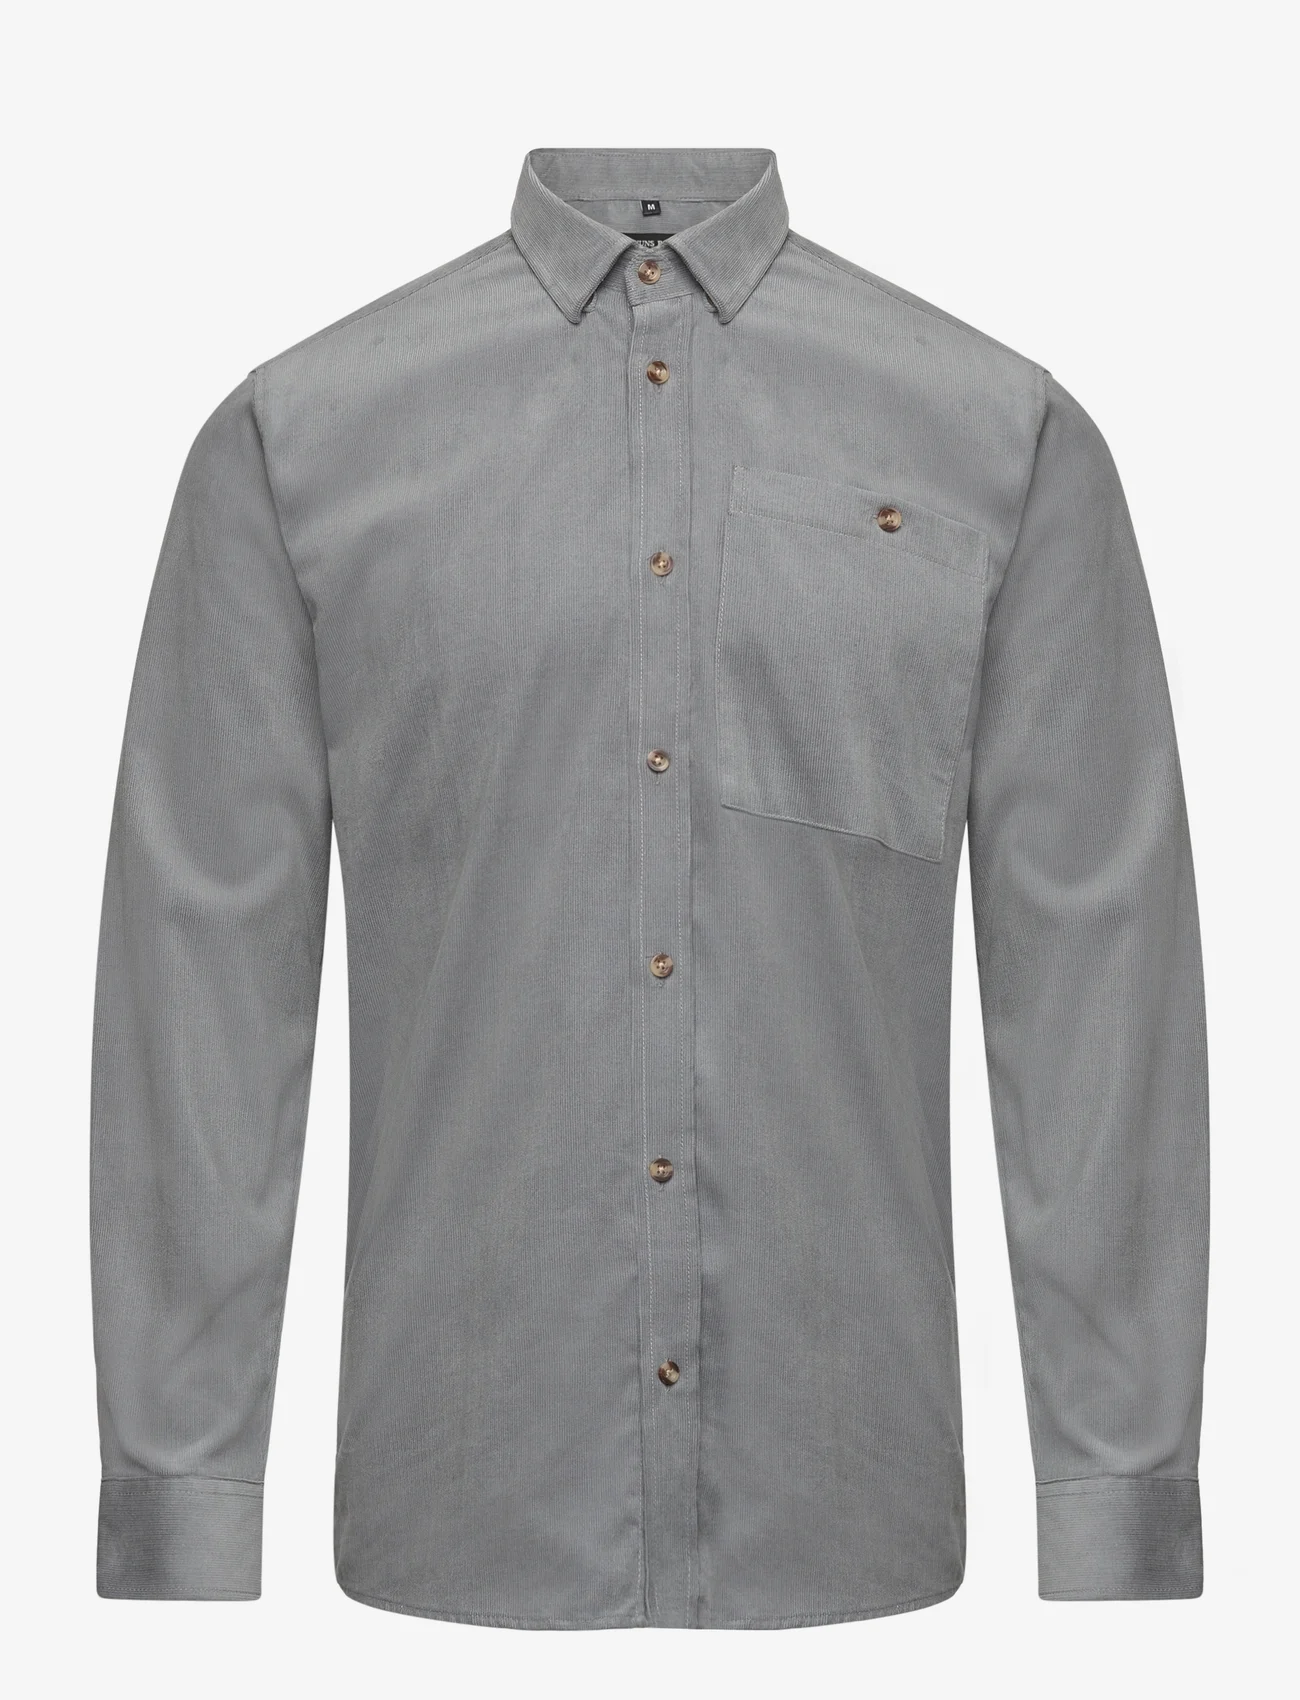 Bruuns Bazaar - CordBBStoke shirt - koszule sztruksowe - light grey - 0